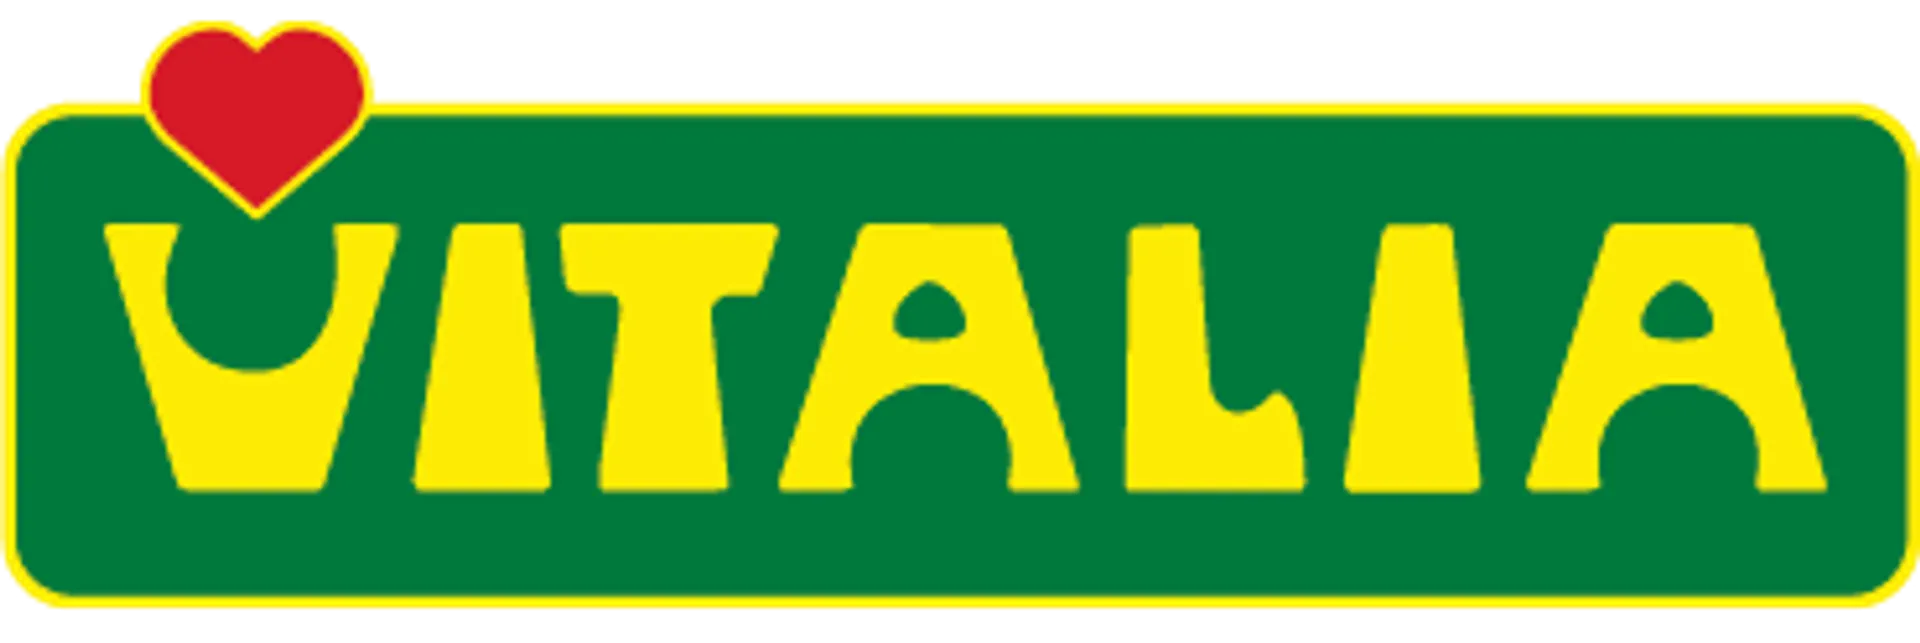 VITALIA logo die aktuell Prospekt